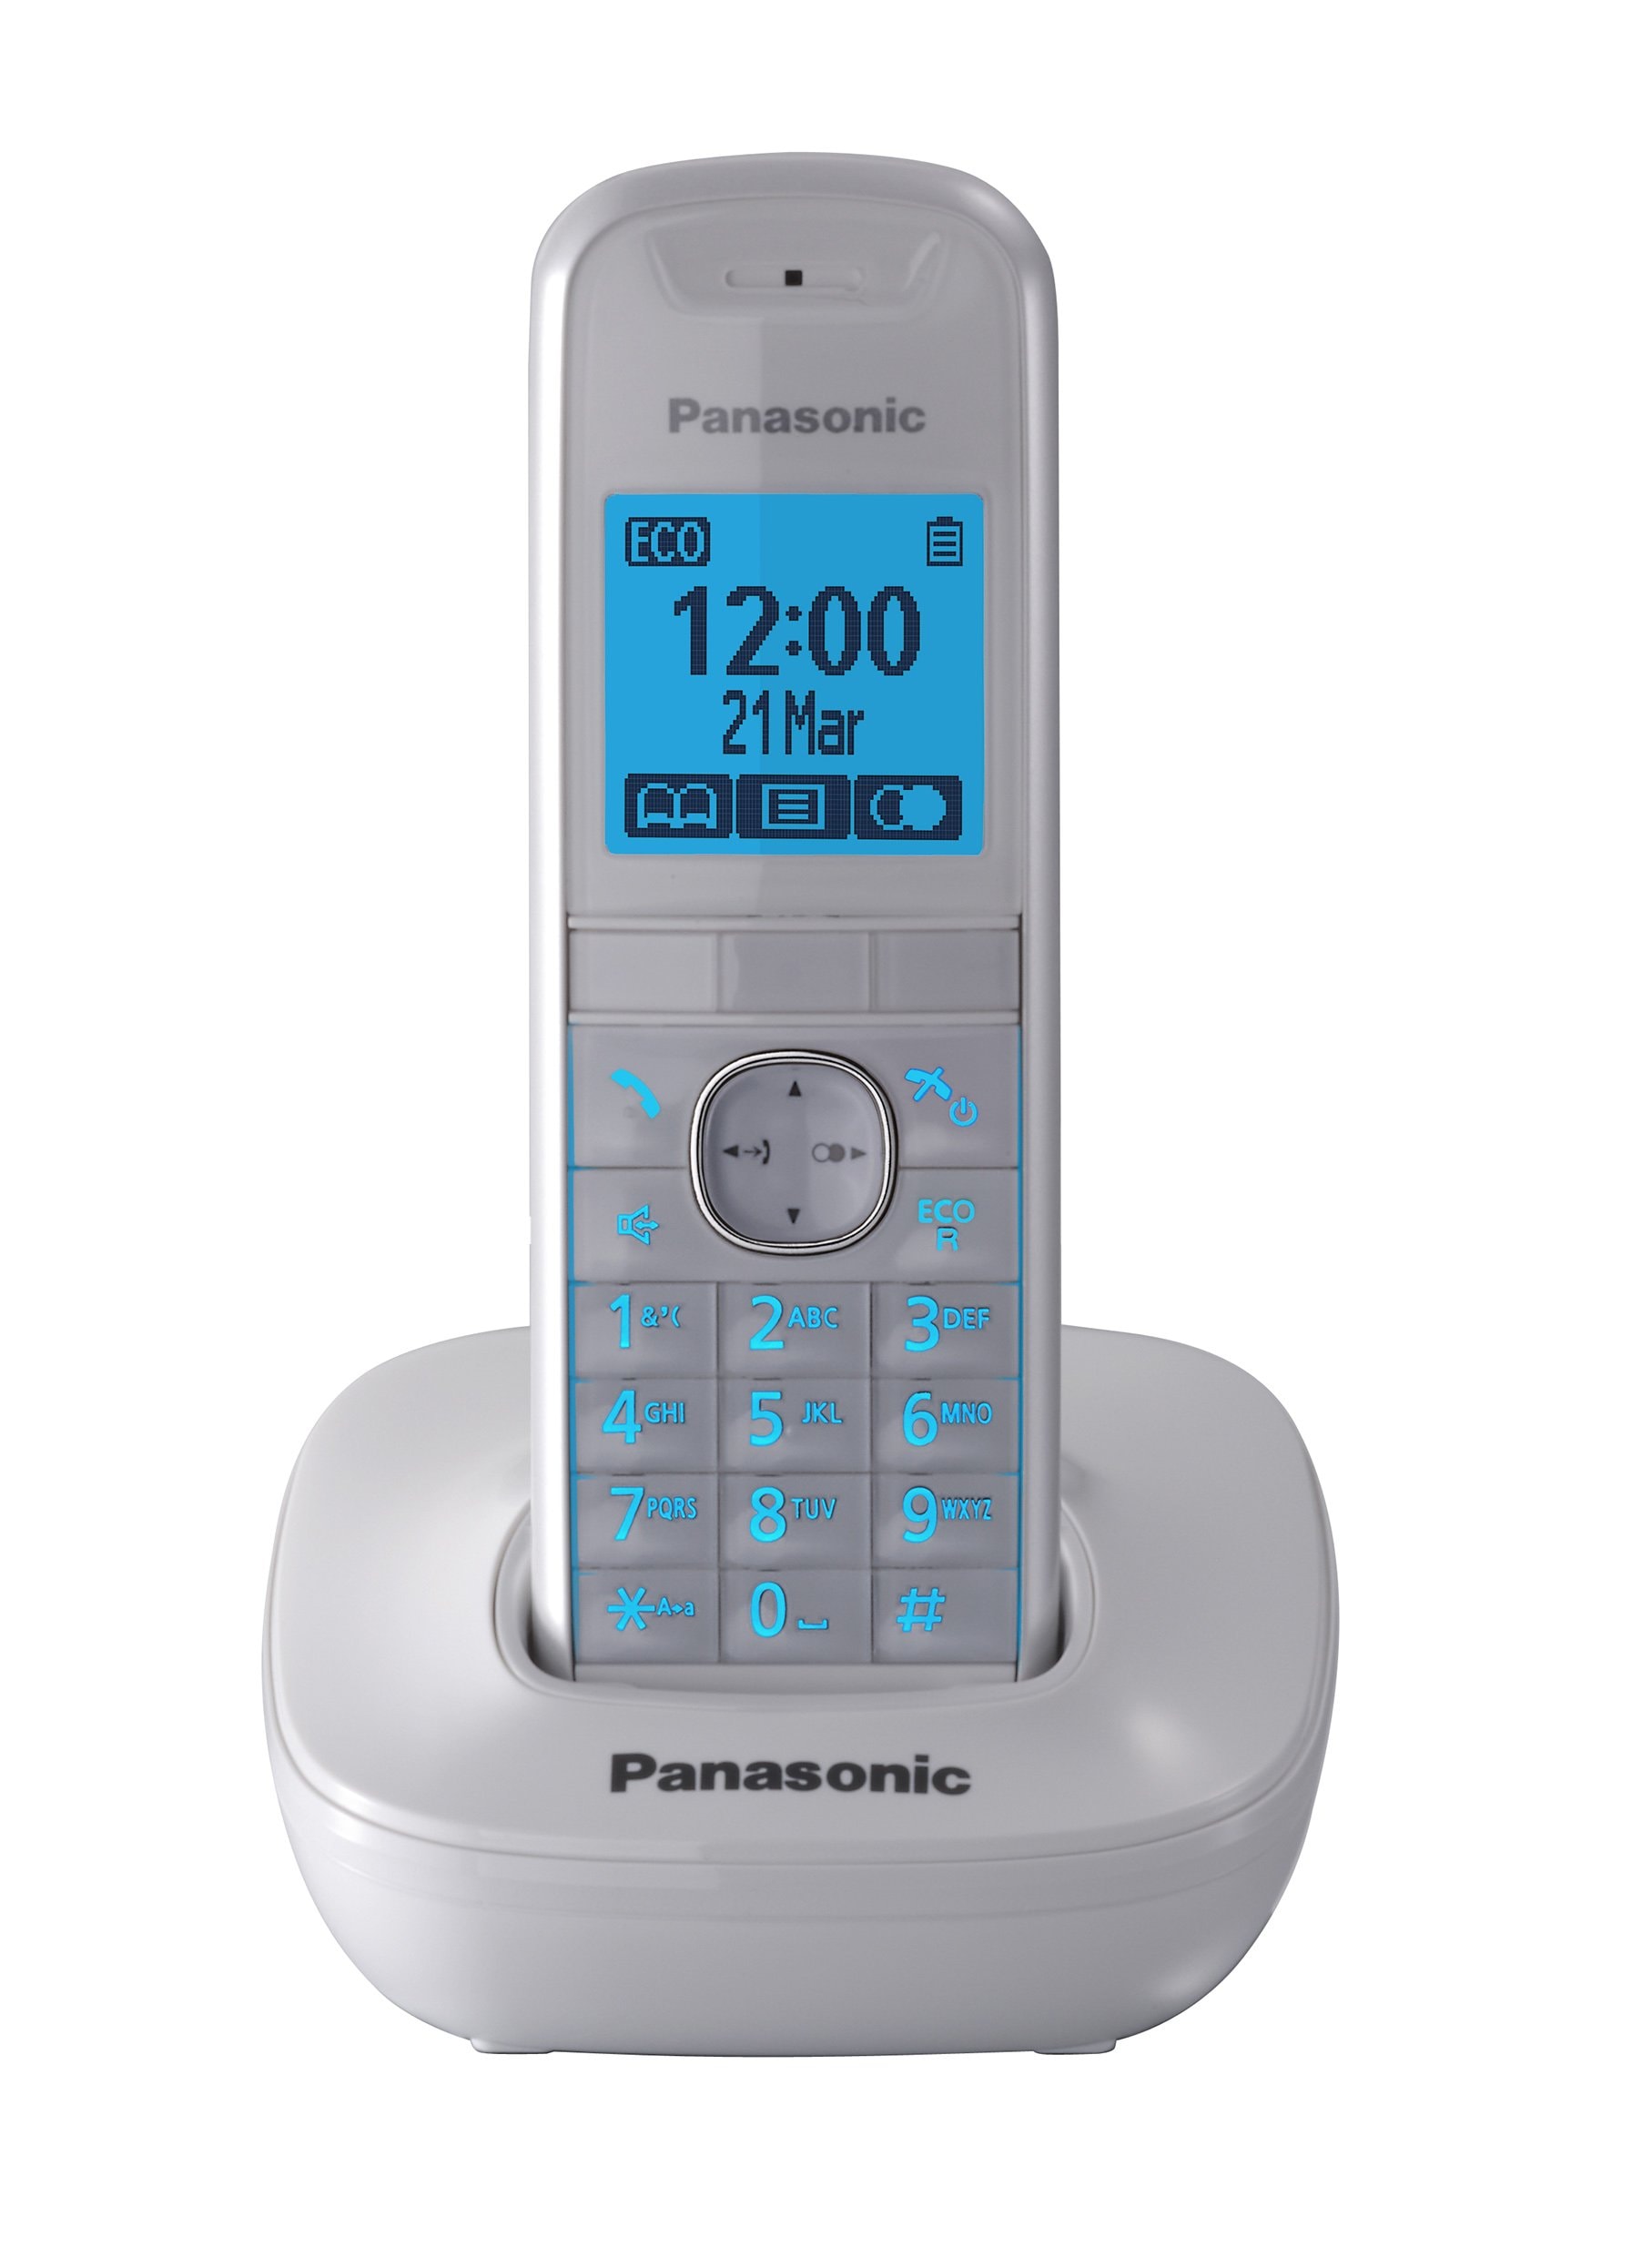 Téléphone sans fil PANASONIC KX-TG5511 blanc